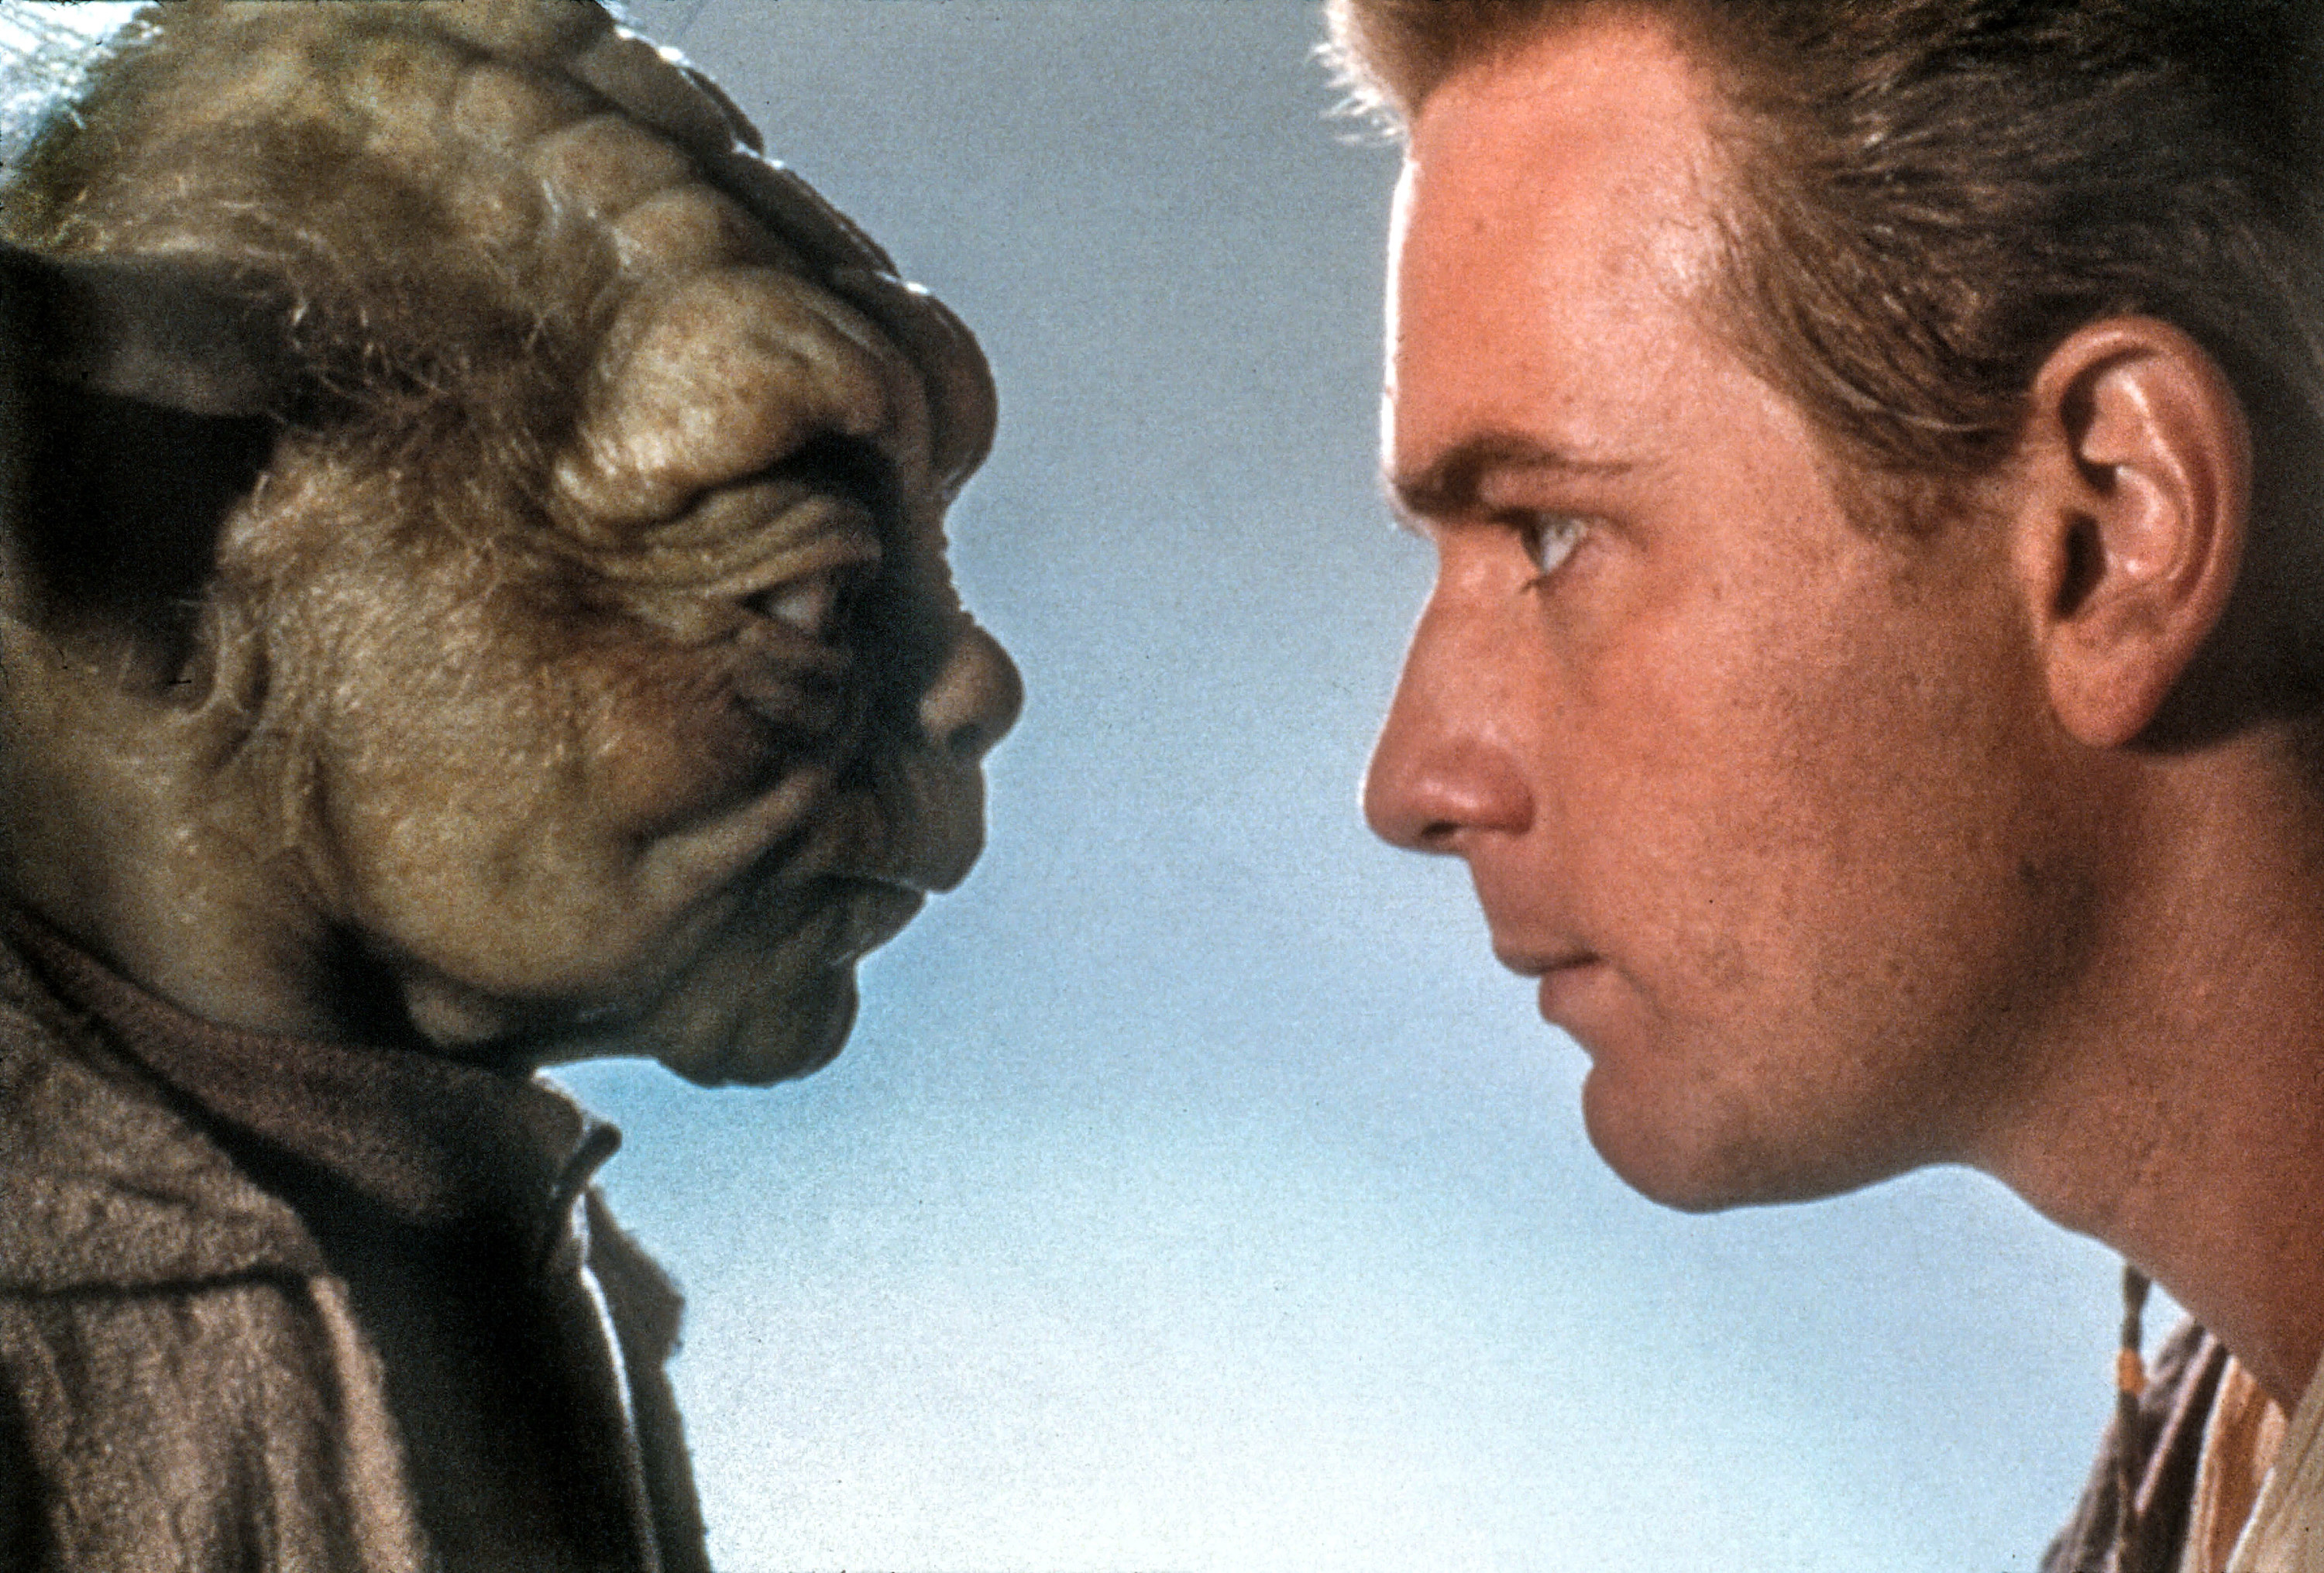 Yoda looks at Ewan McGregor